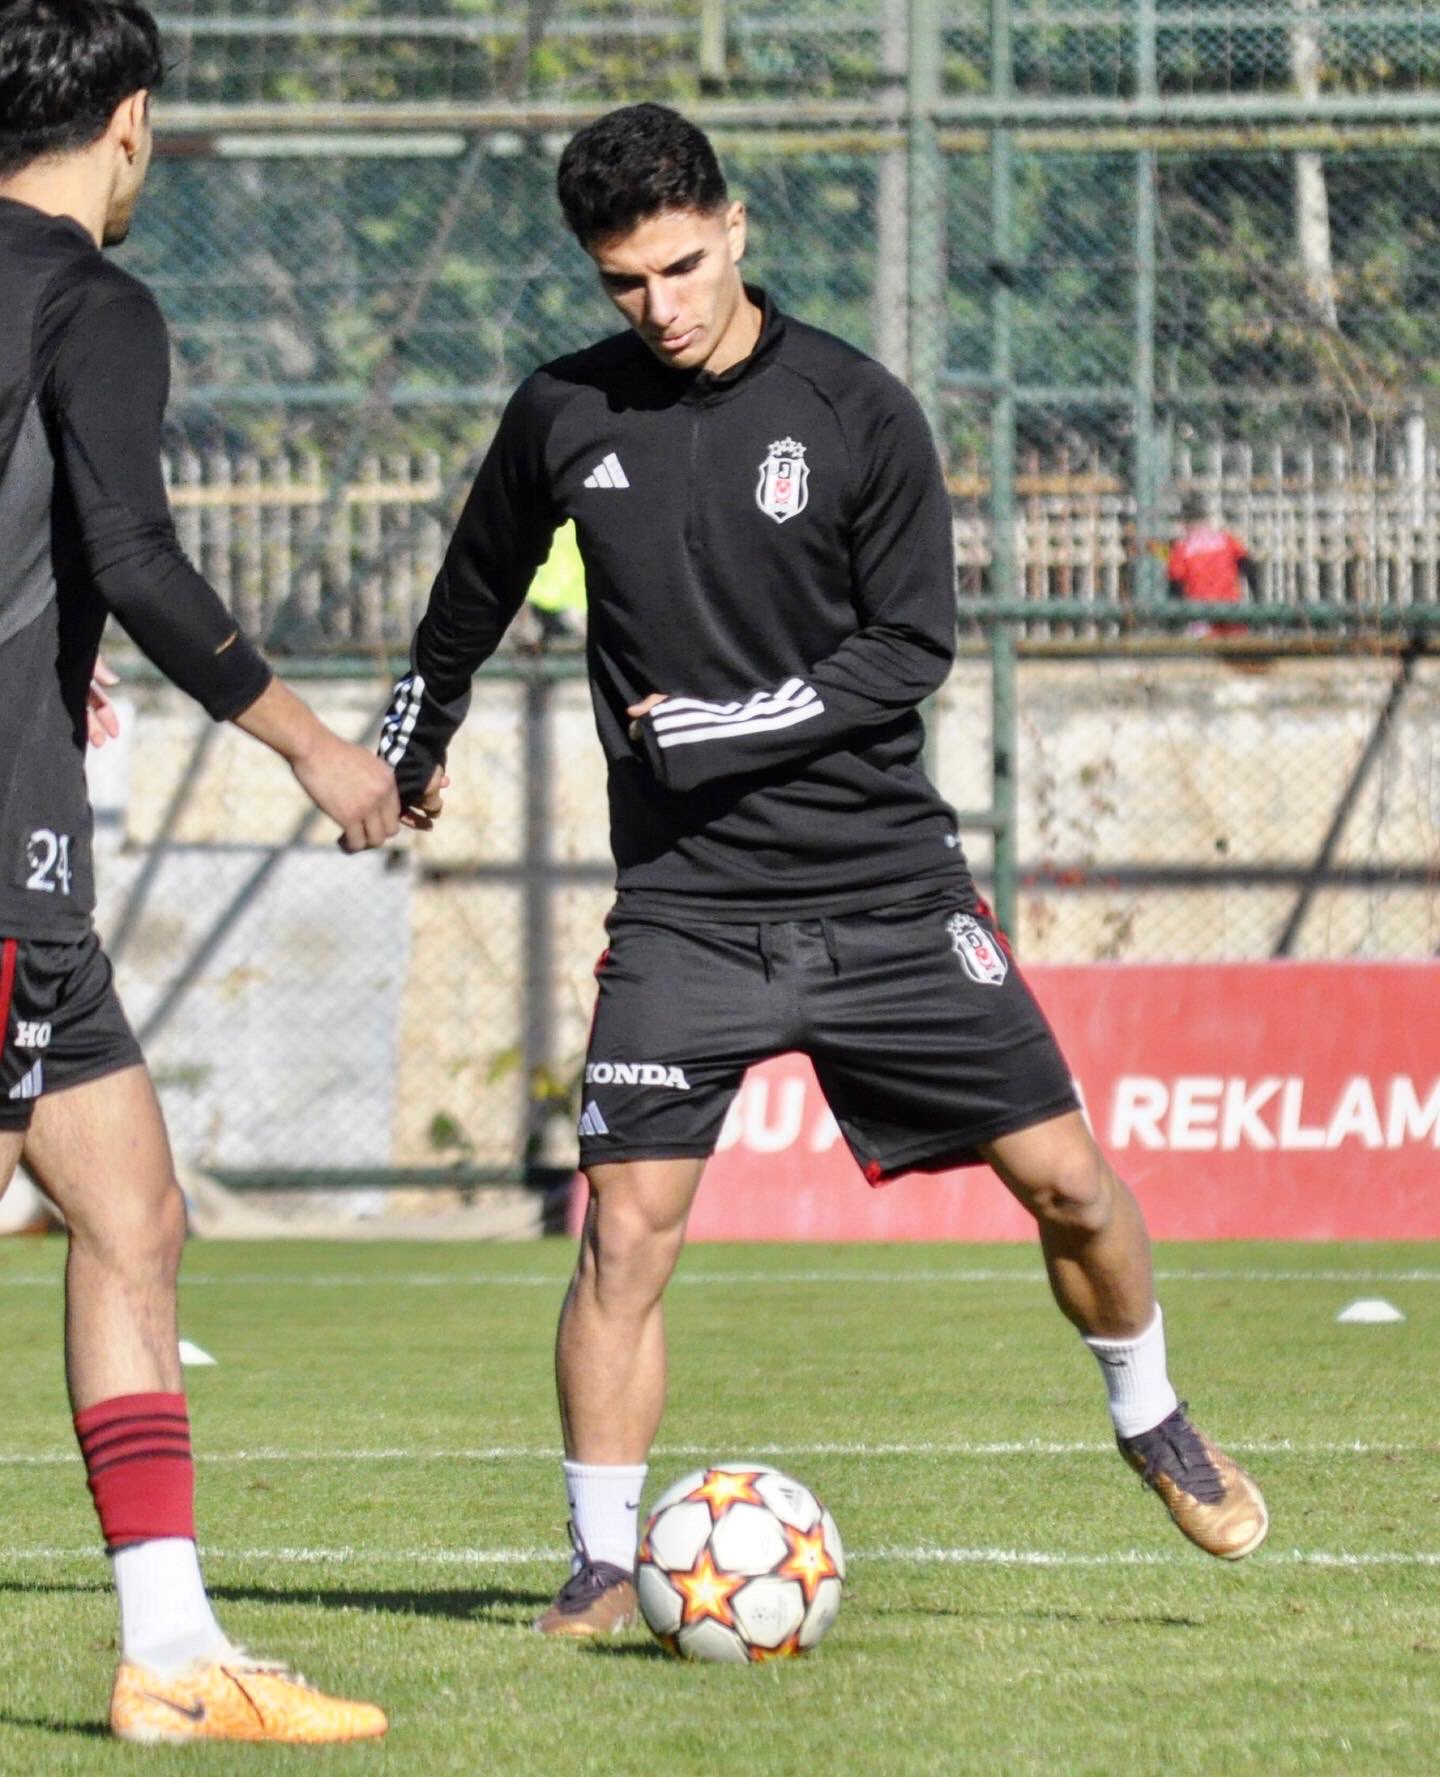 Beşiktaş JK Futbol Akademisi (@bjkakademi) • Instagram photos and videos